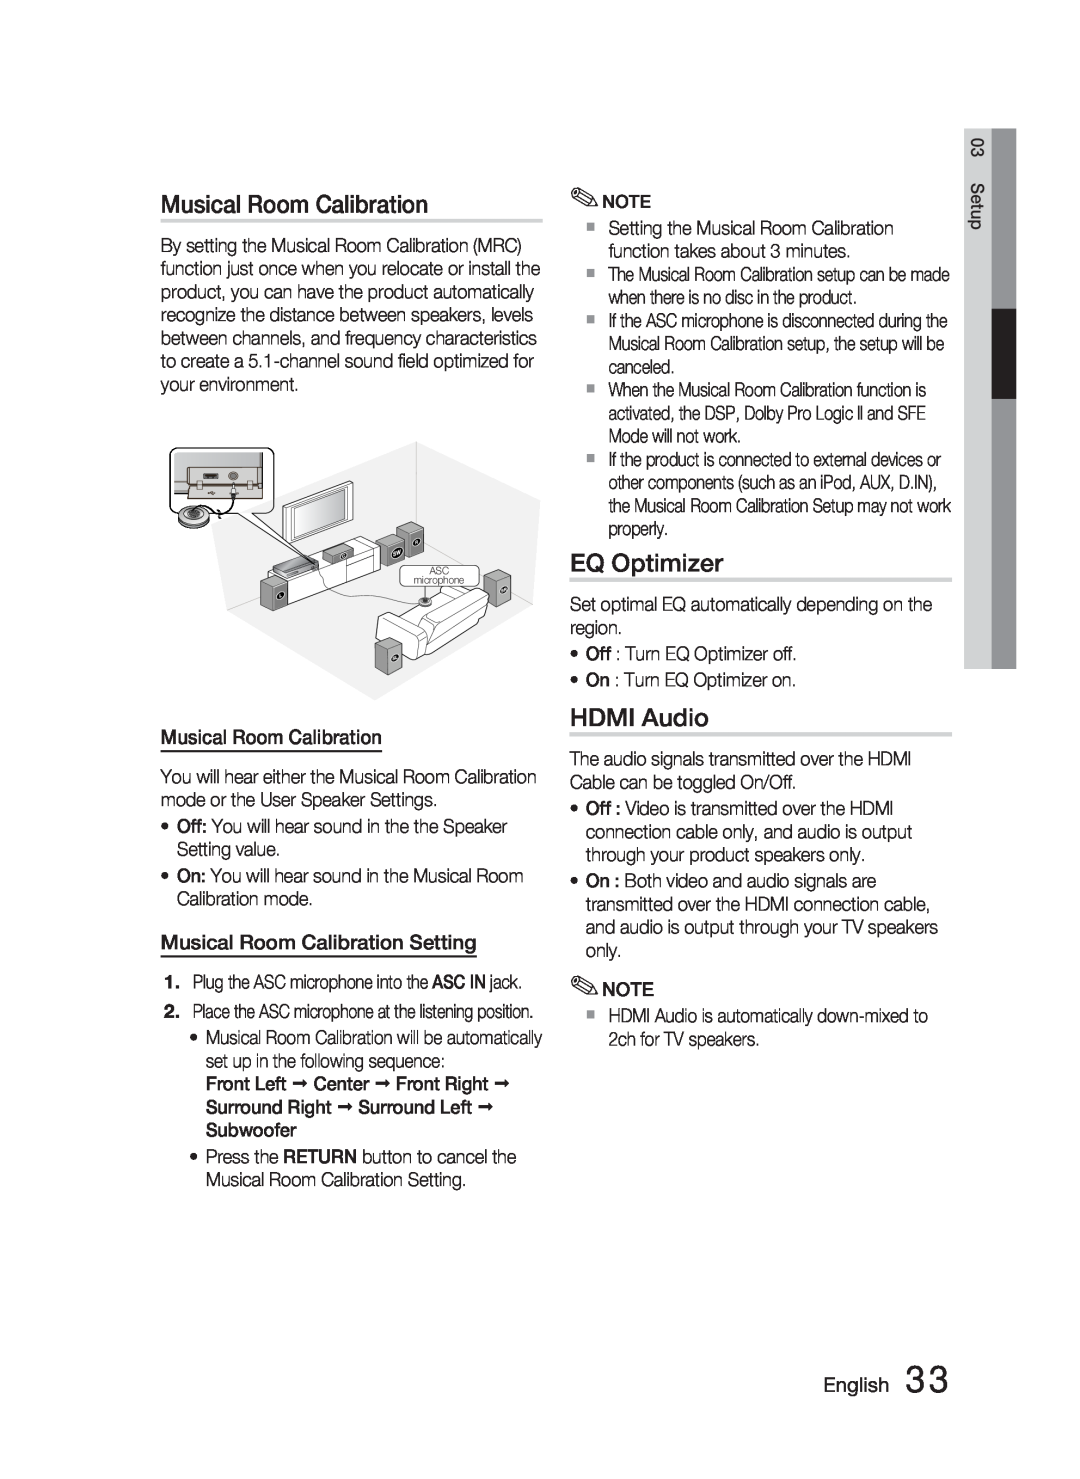 Samsung HT-C5500 user manual EQ Optimizer, HDMI Audio, Musical Room Calibration Setting, English 